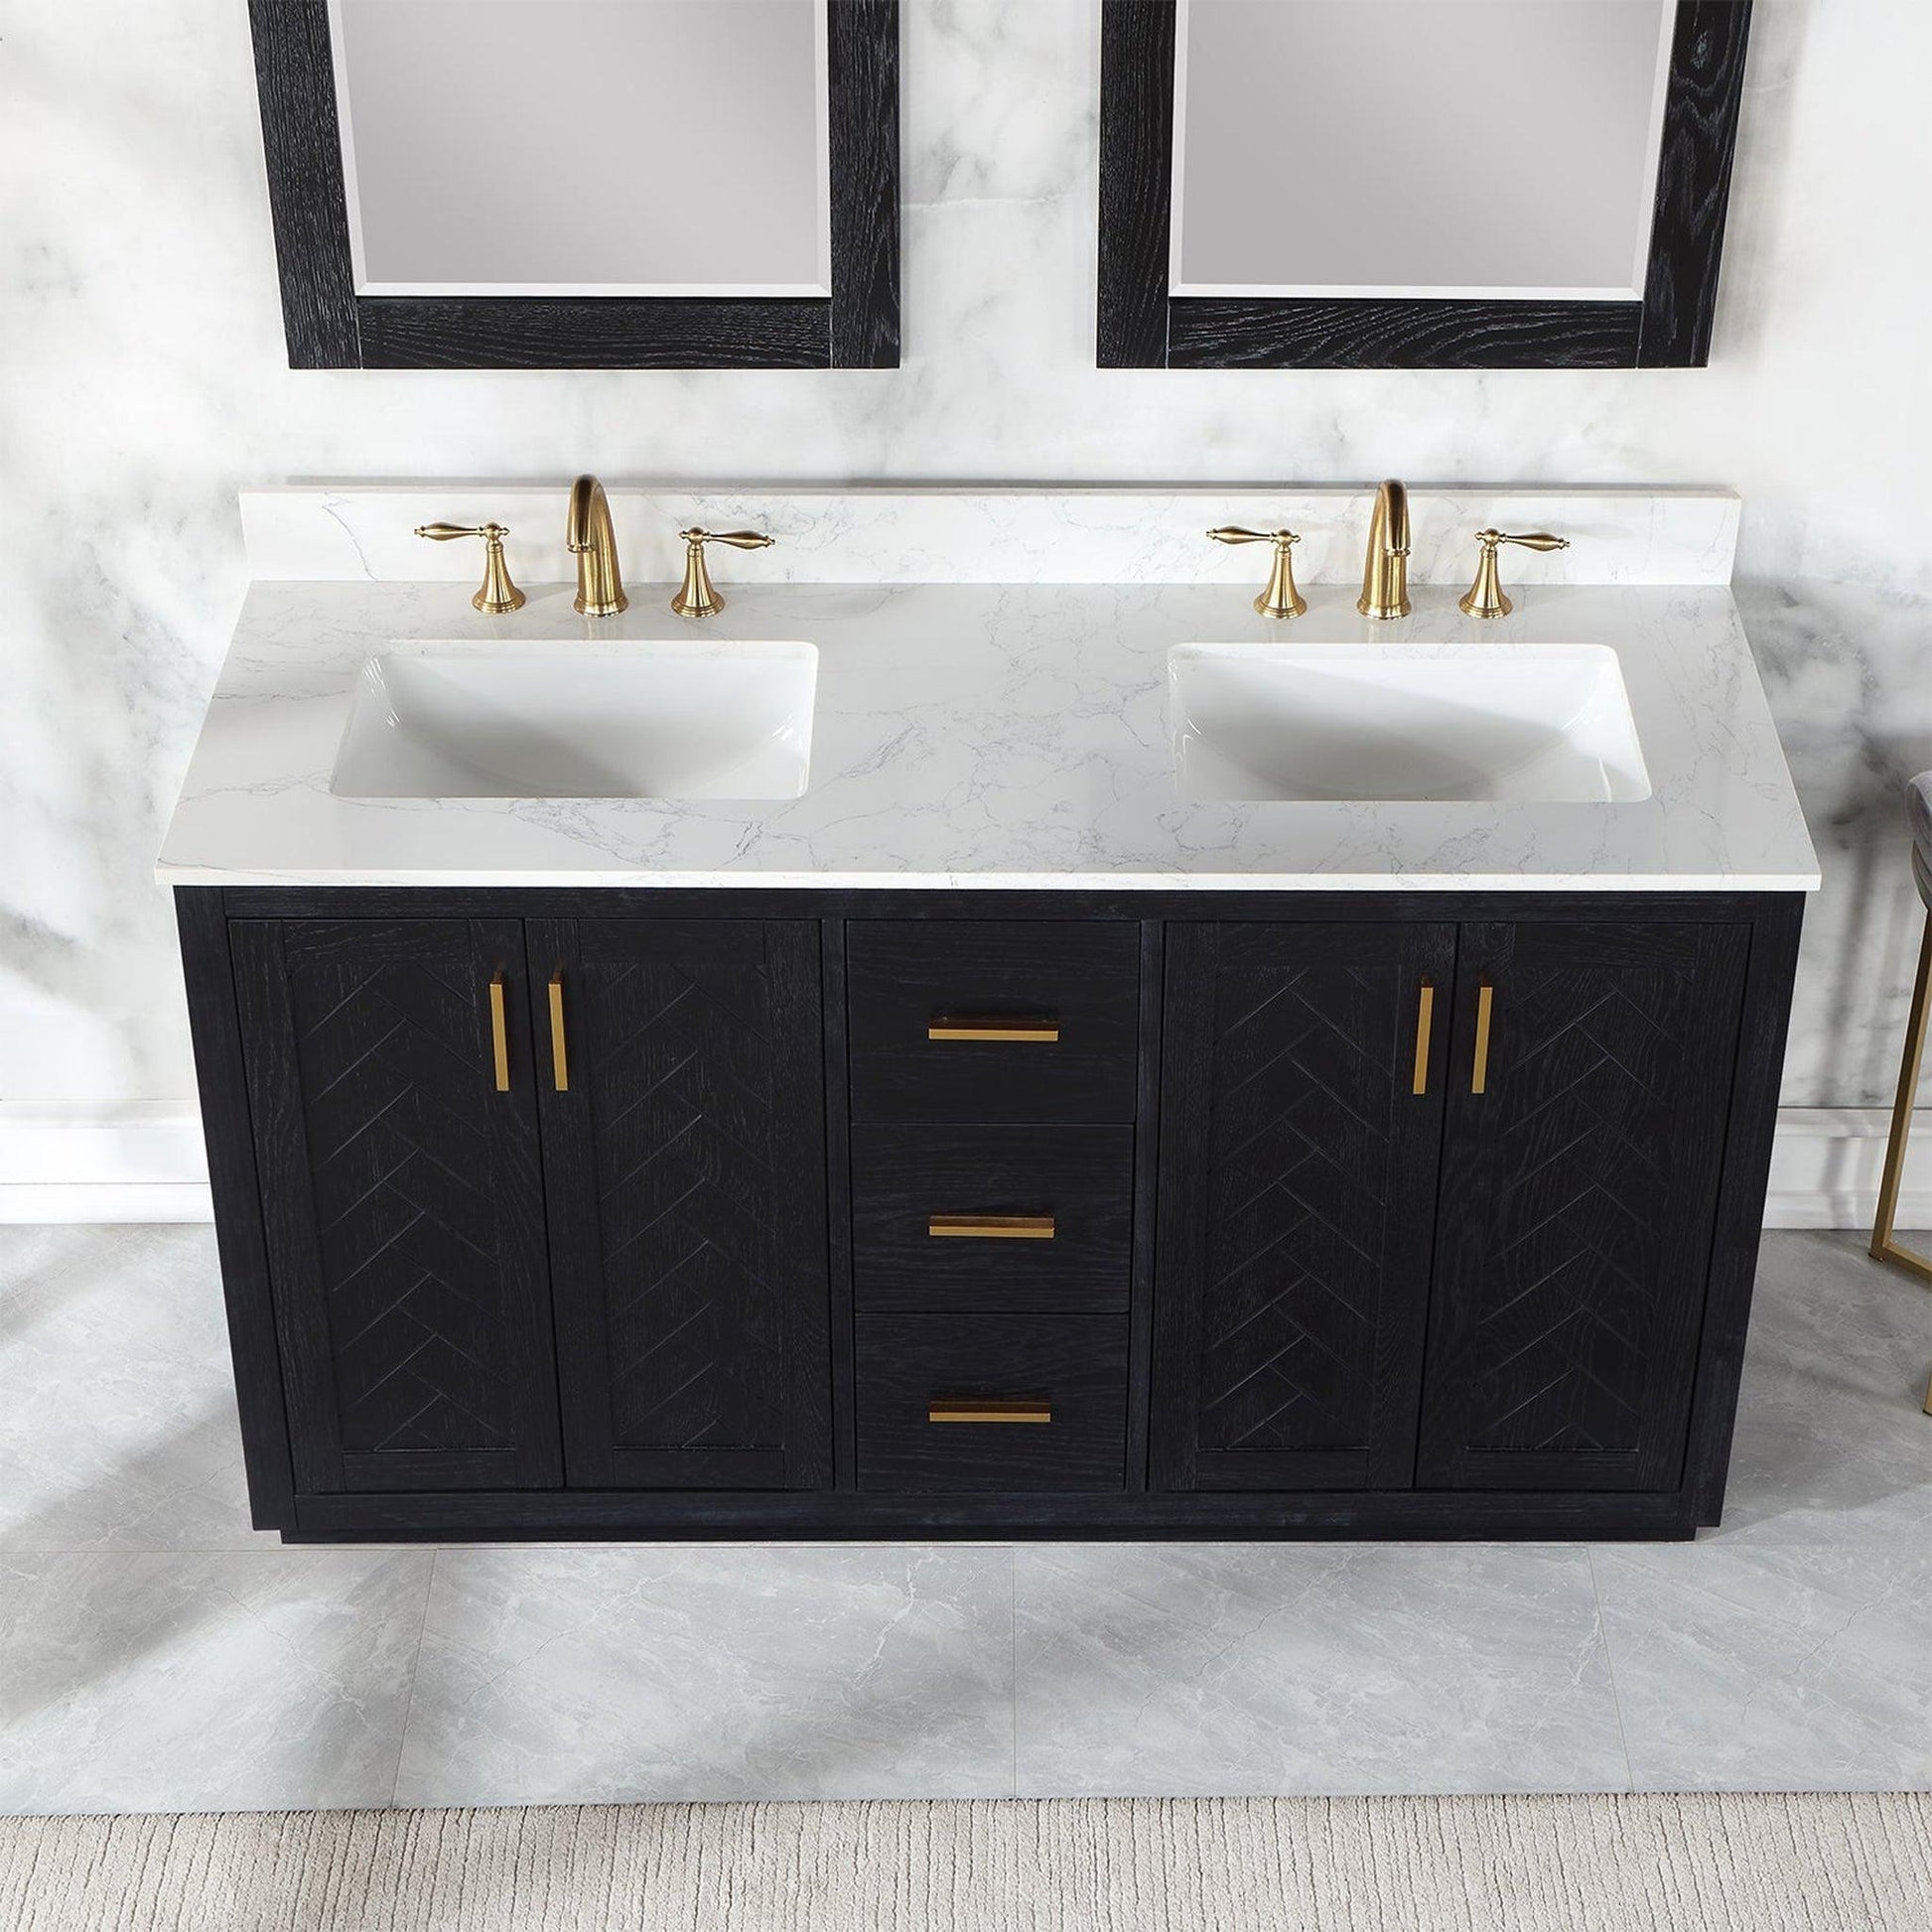 Altair Gazsi 60" Black Oak Freestanding Double Bathroom Vanity Set With Mirror, Elegant Composite Grain White Stone Top, Two Rectangular Undermount Ceramic Sinks, Overflow, and Backsplash